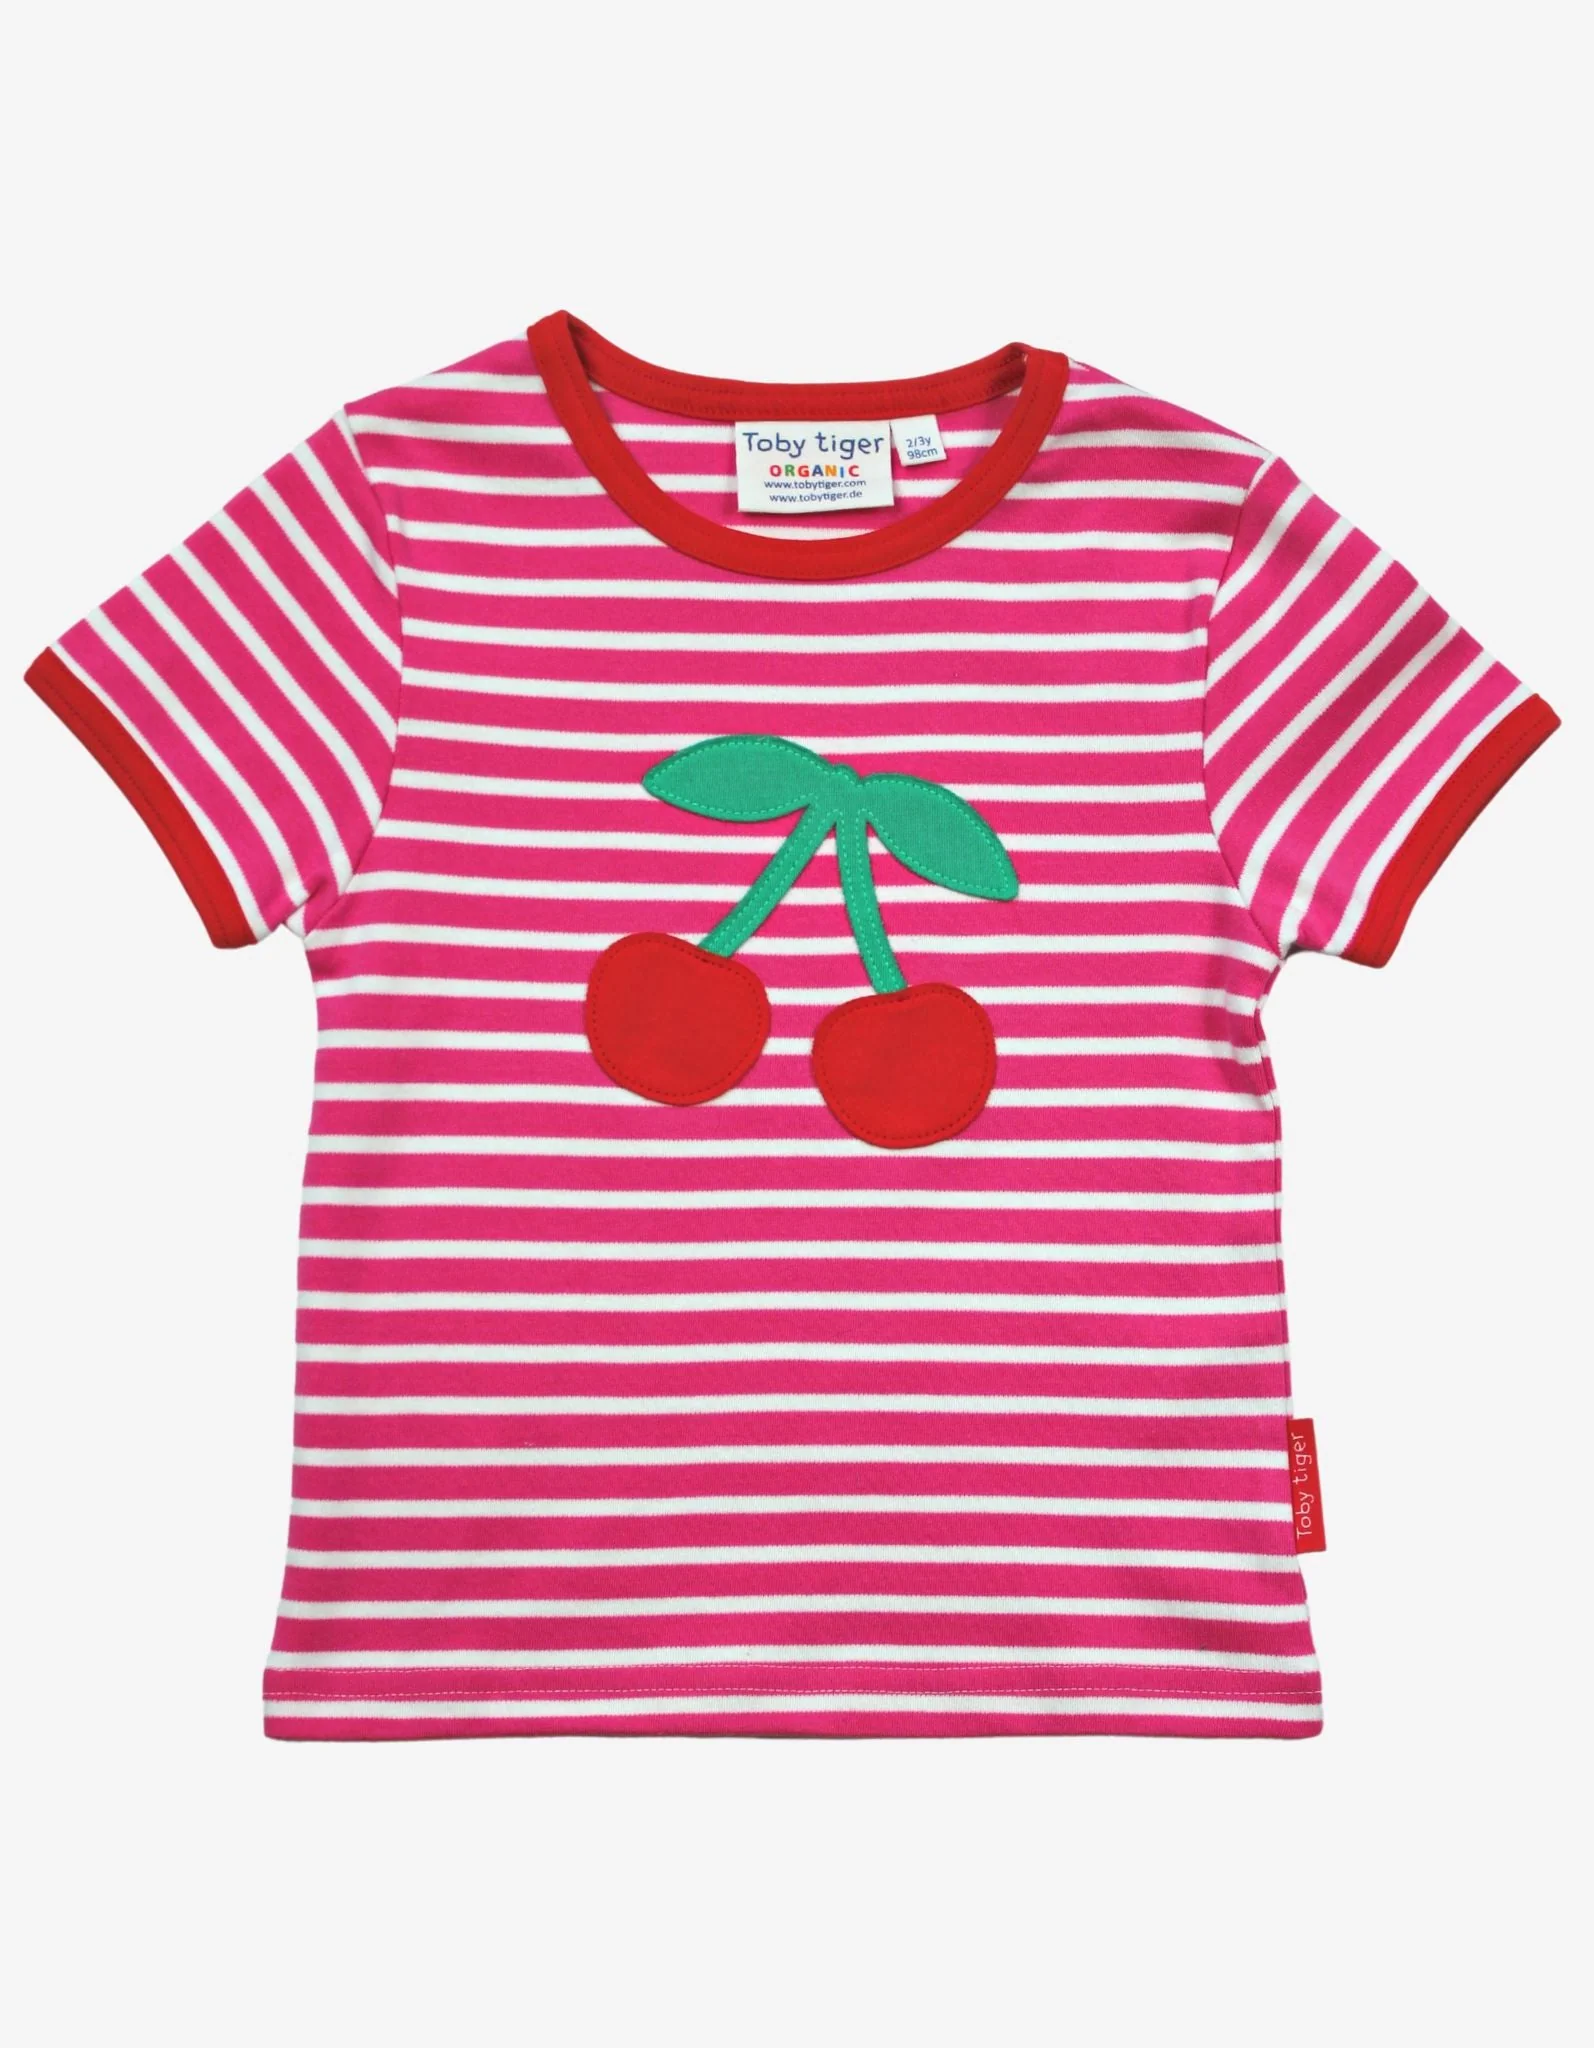 Toby Tiger Organic Cherry Applique T Shirt